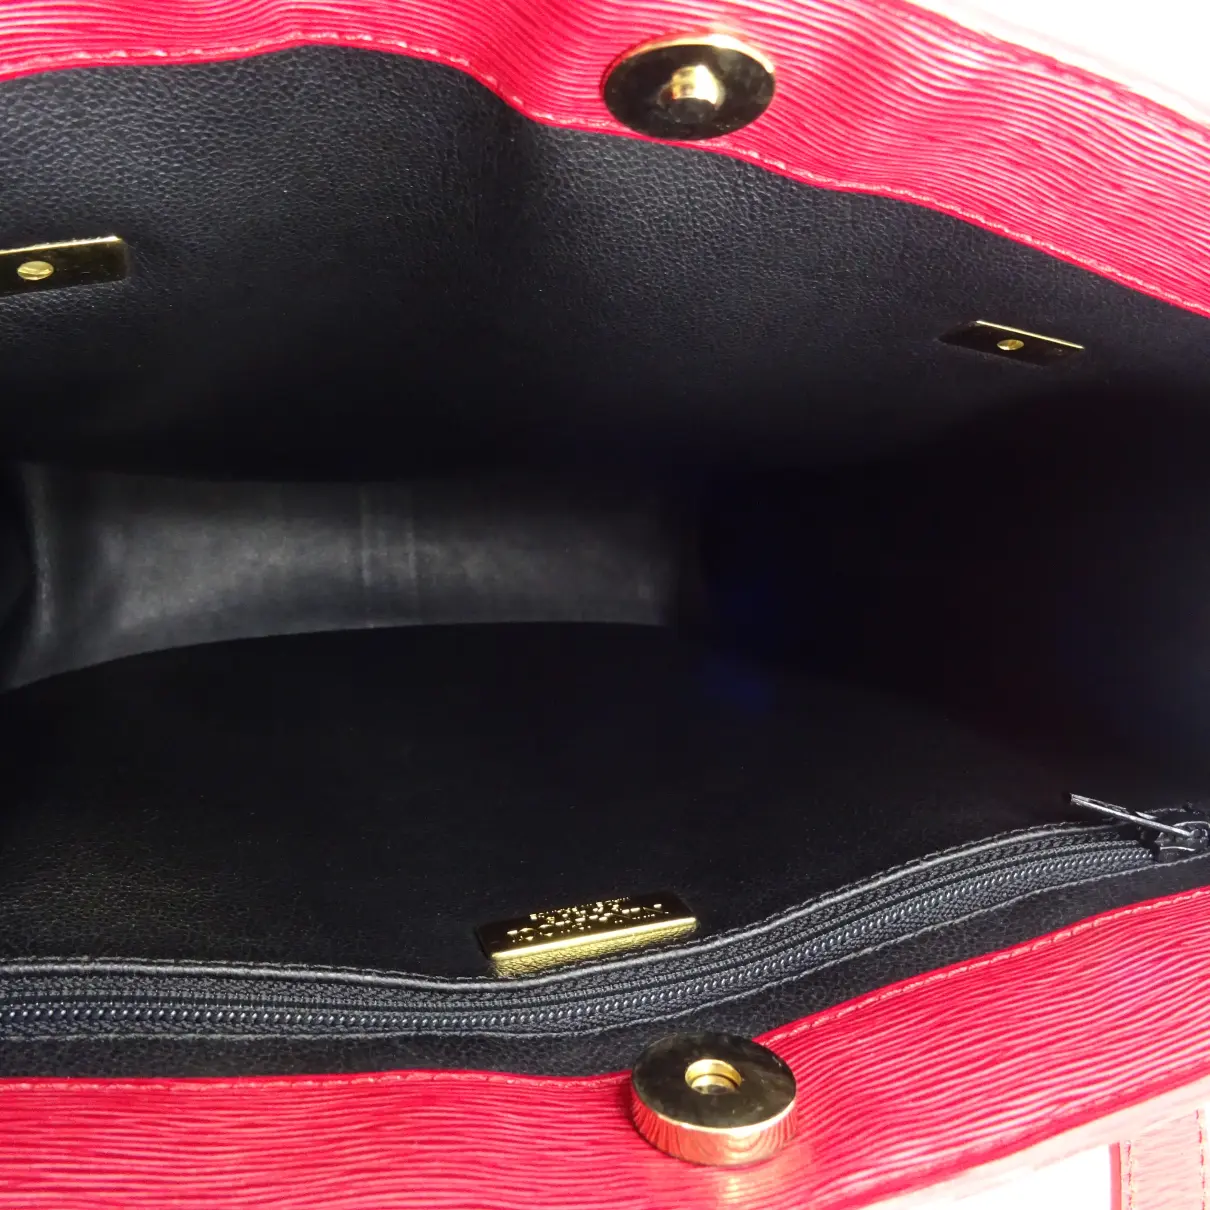 Leather handbag Nina Ricci